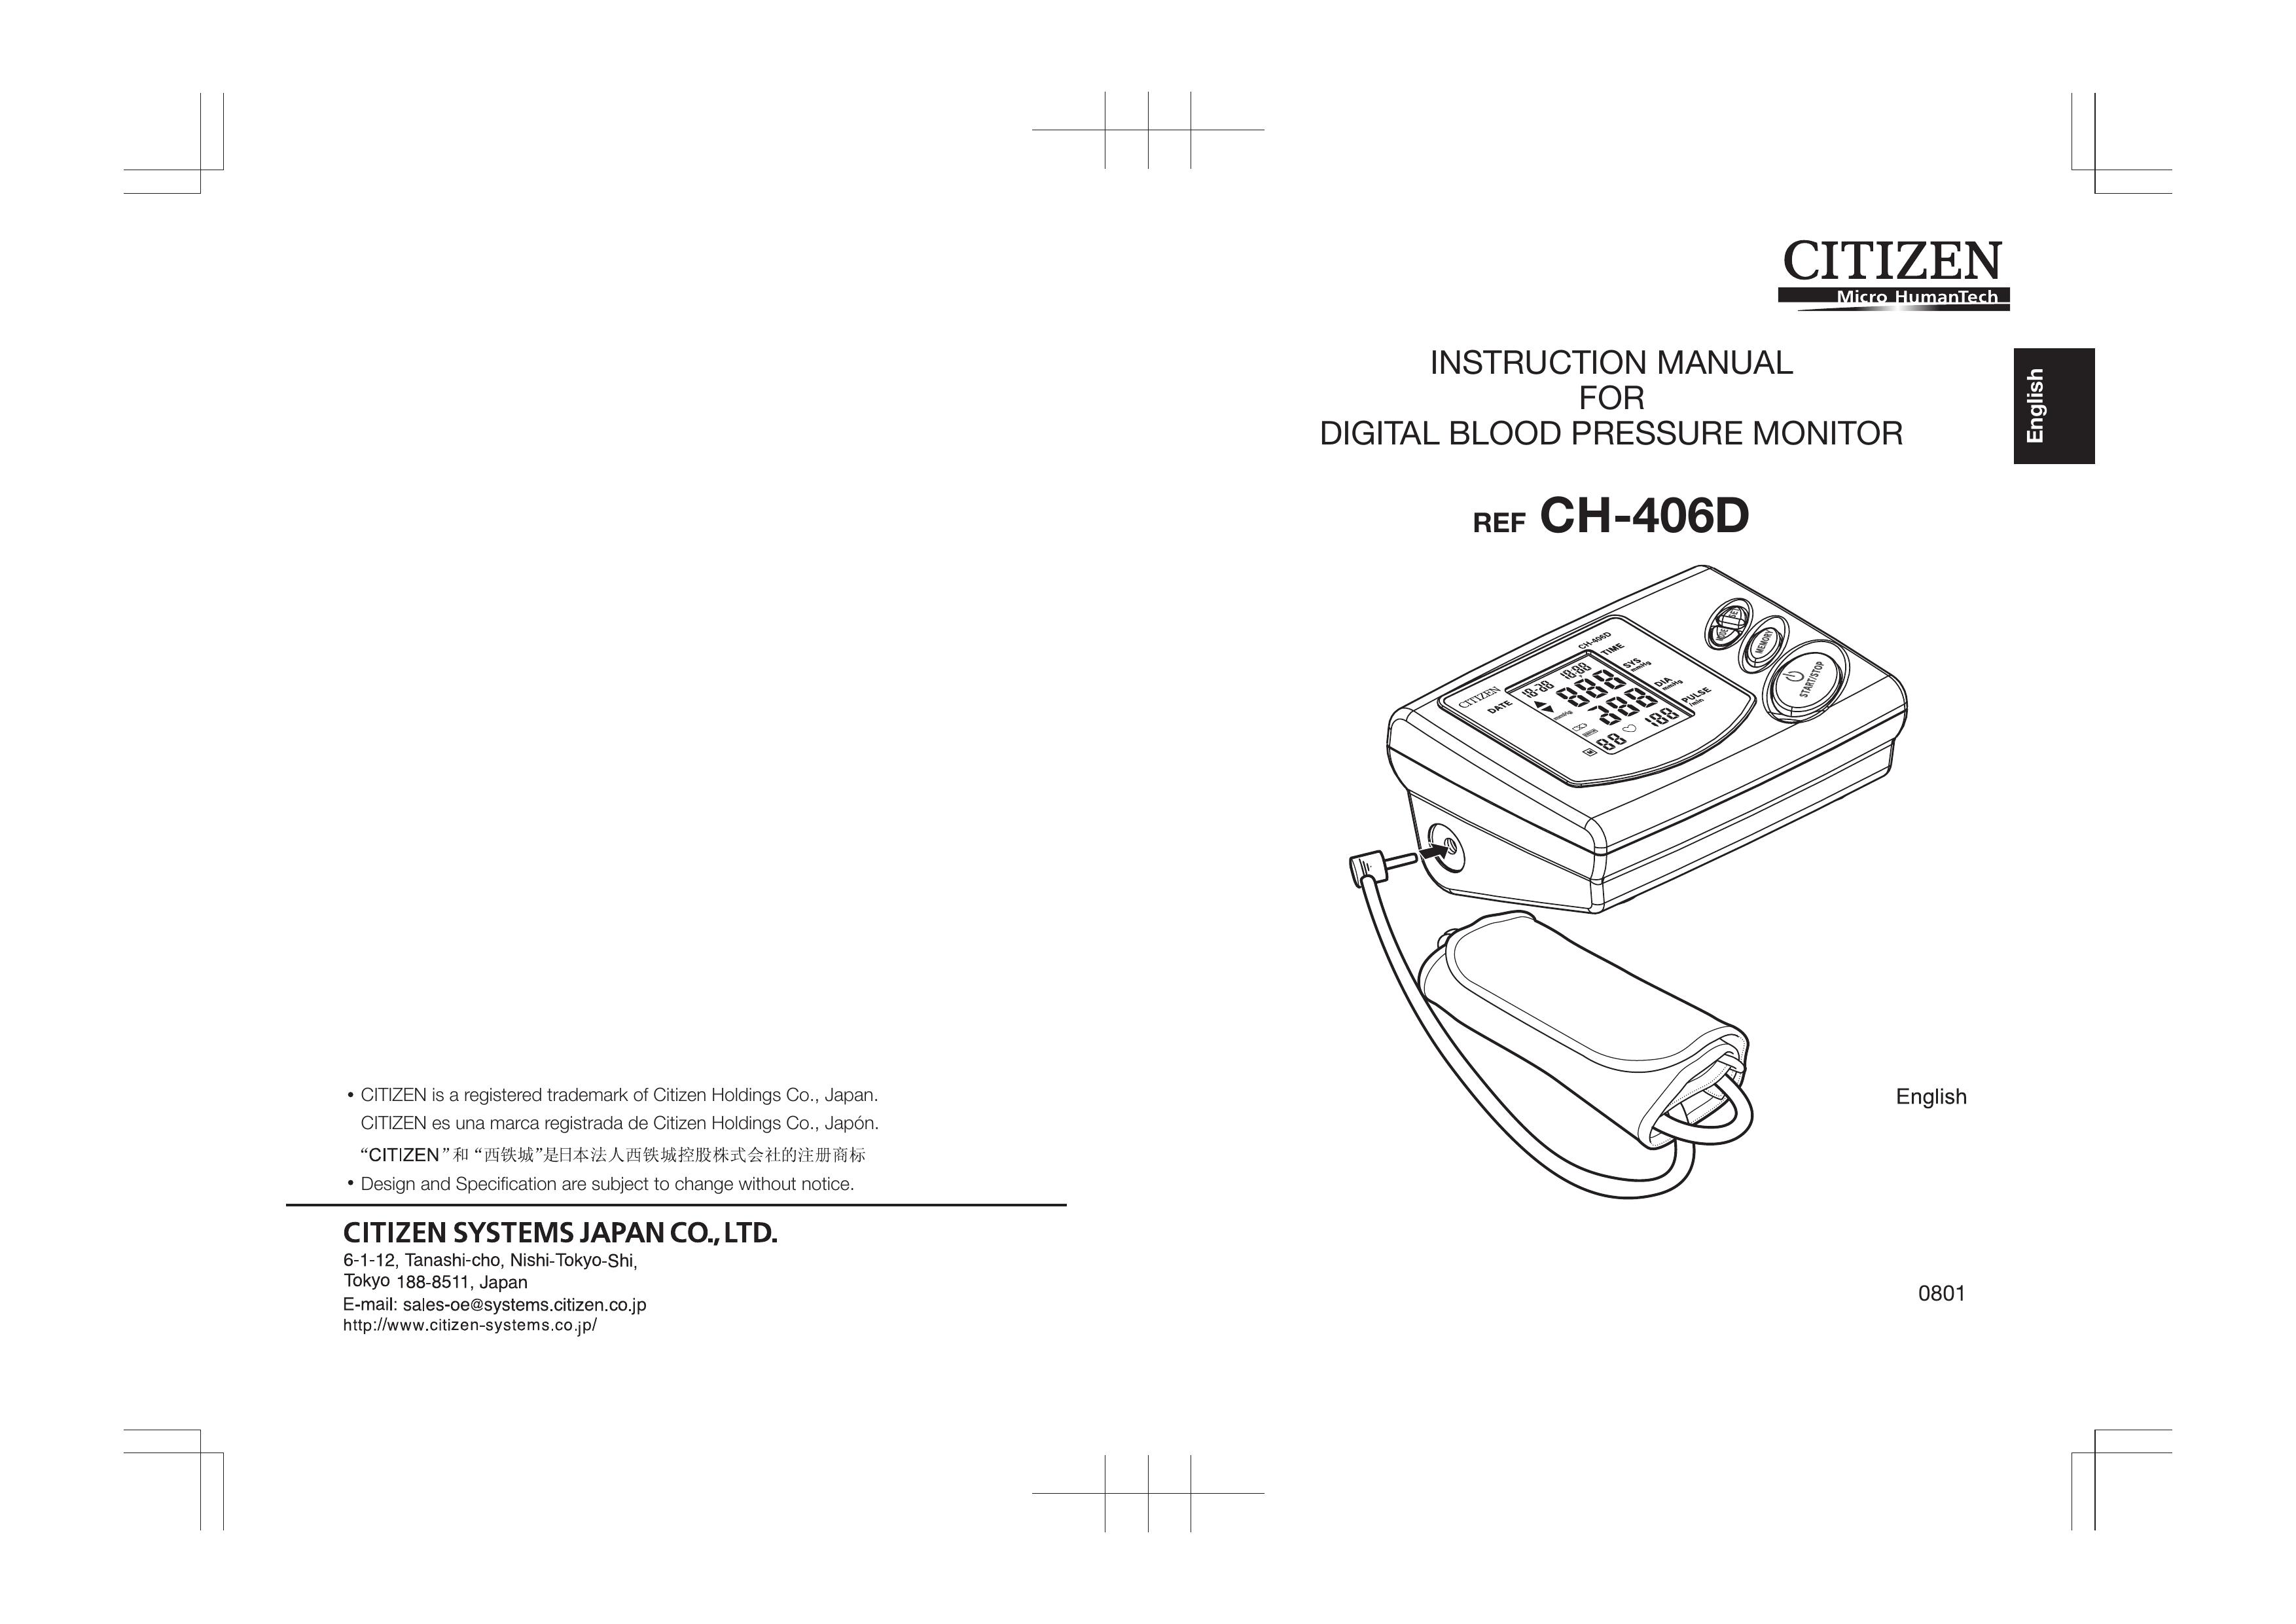 Citizen CH-406D Blood Pressure Monitor User Manual